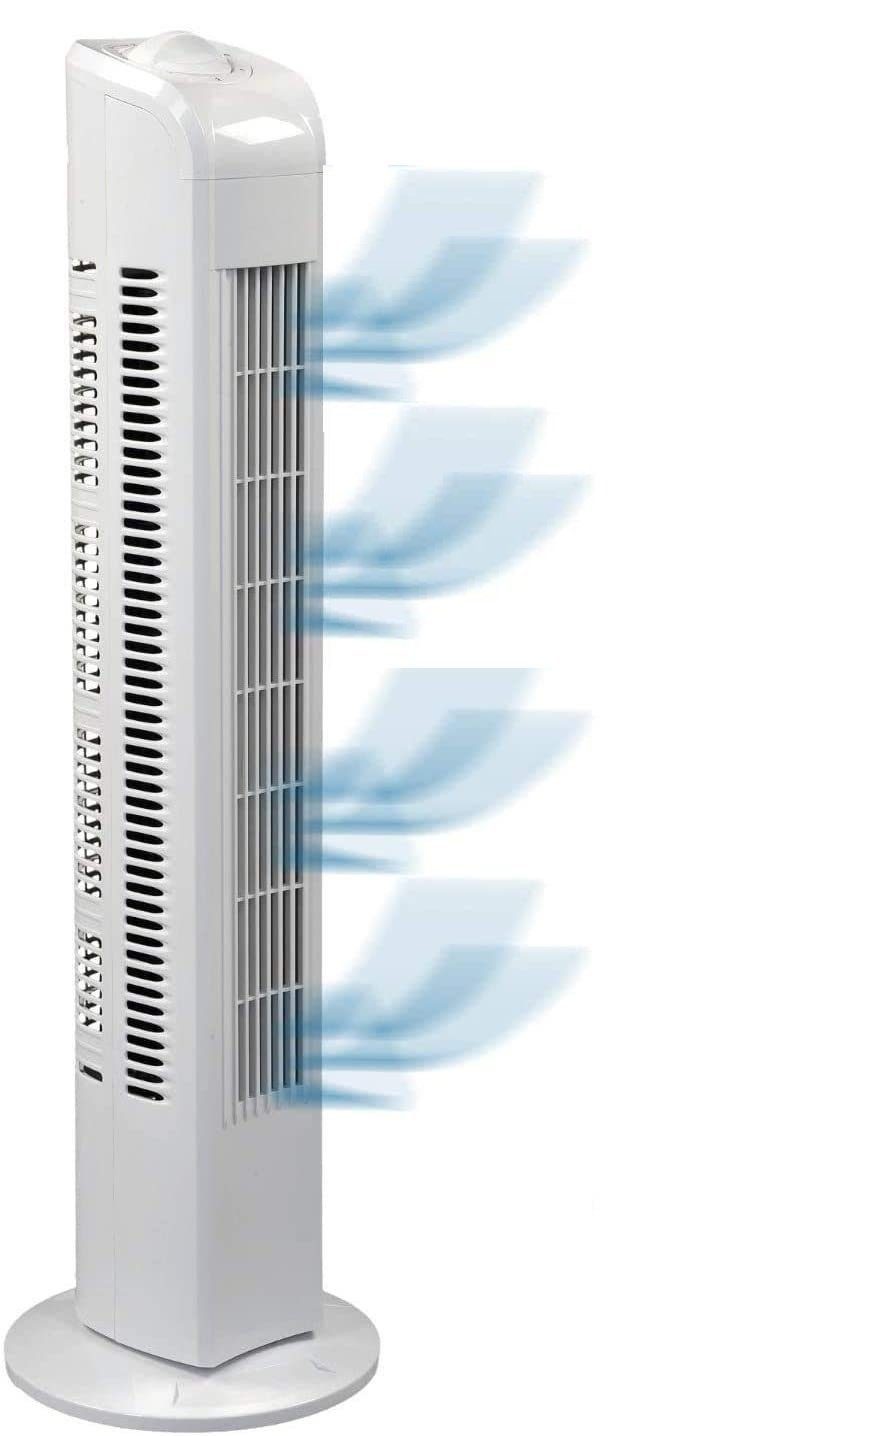 JUNG Turmventilator TF35 Ventilator 78cm Turmventilator Вентилятори, 75° Oszillation, Standventilator, 50W Turmlüfter, bis 40m², leise, Вентилятори